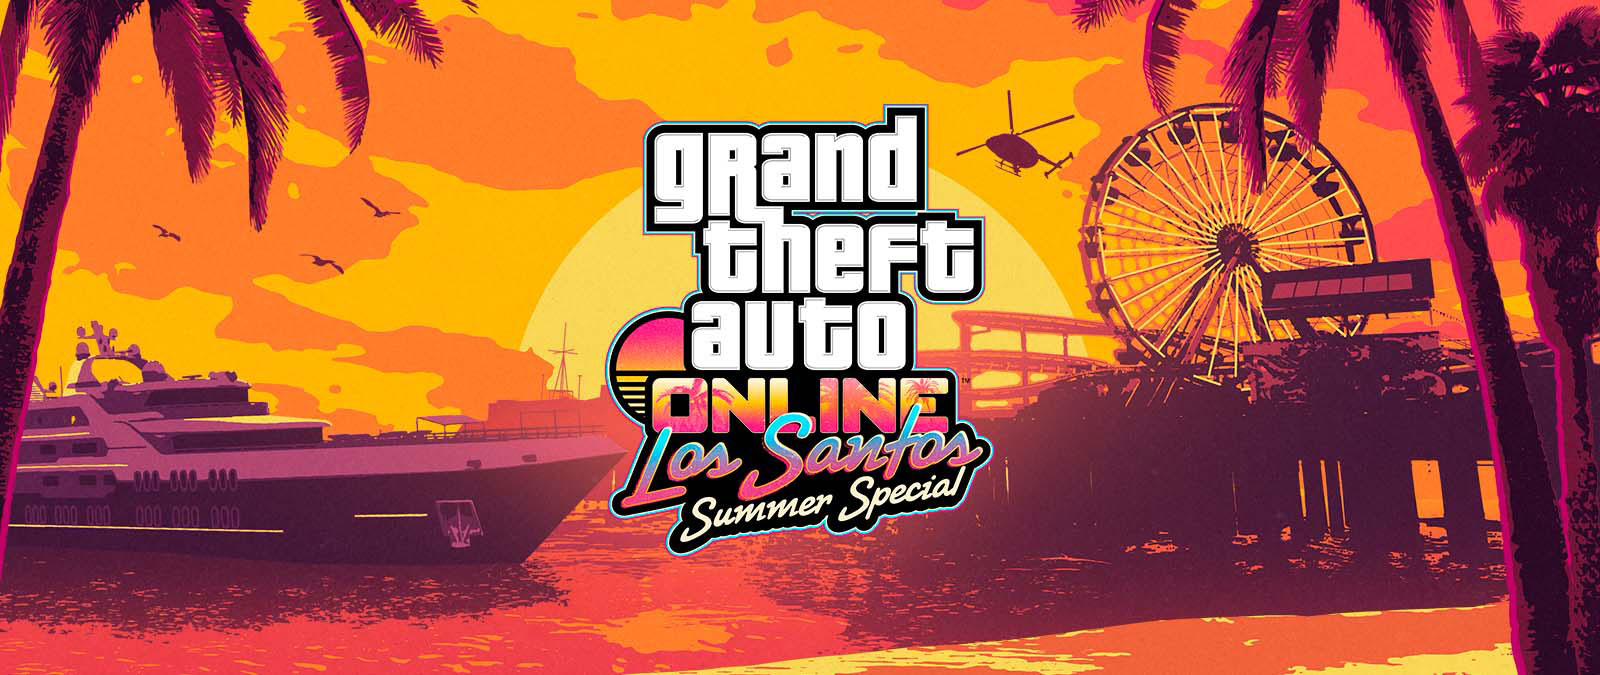 Grand Theft Auto Online。Los Santos Summer Special。日落時的遊艇、摩天輪和直升機